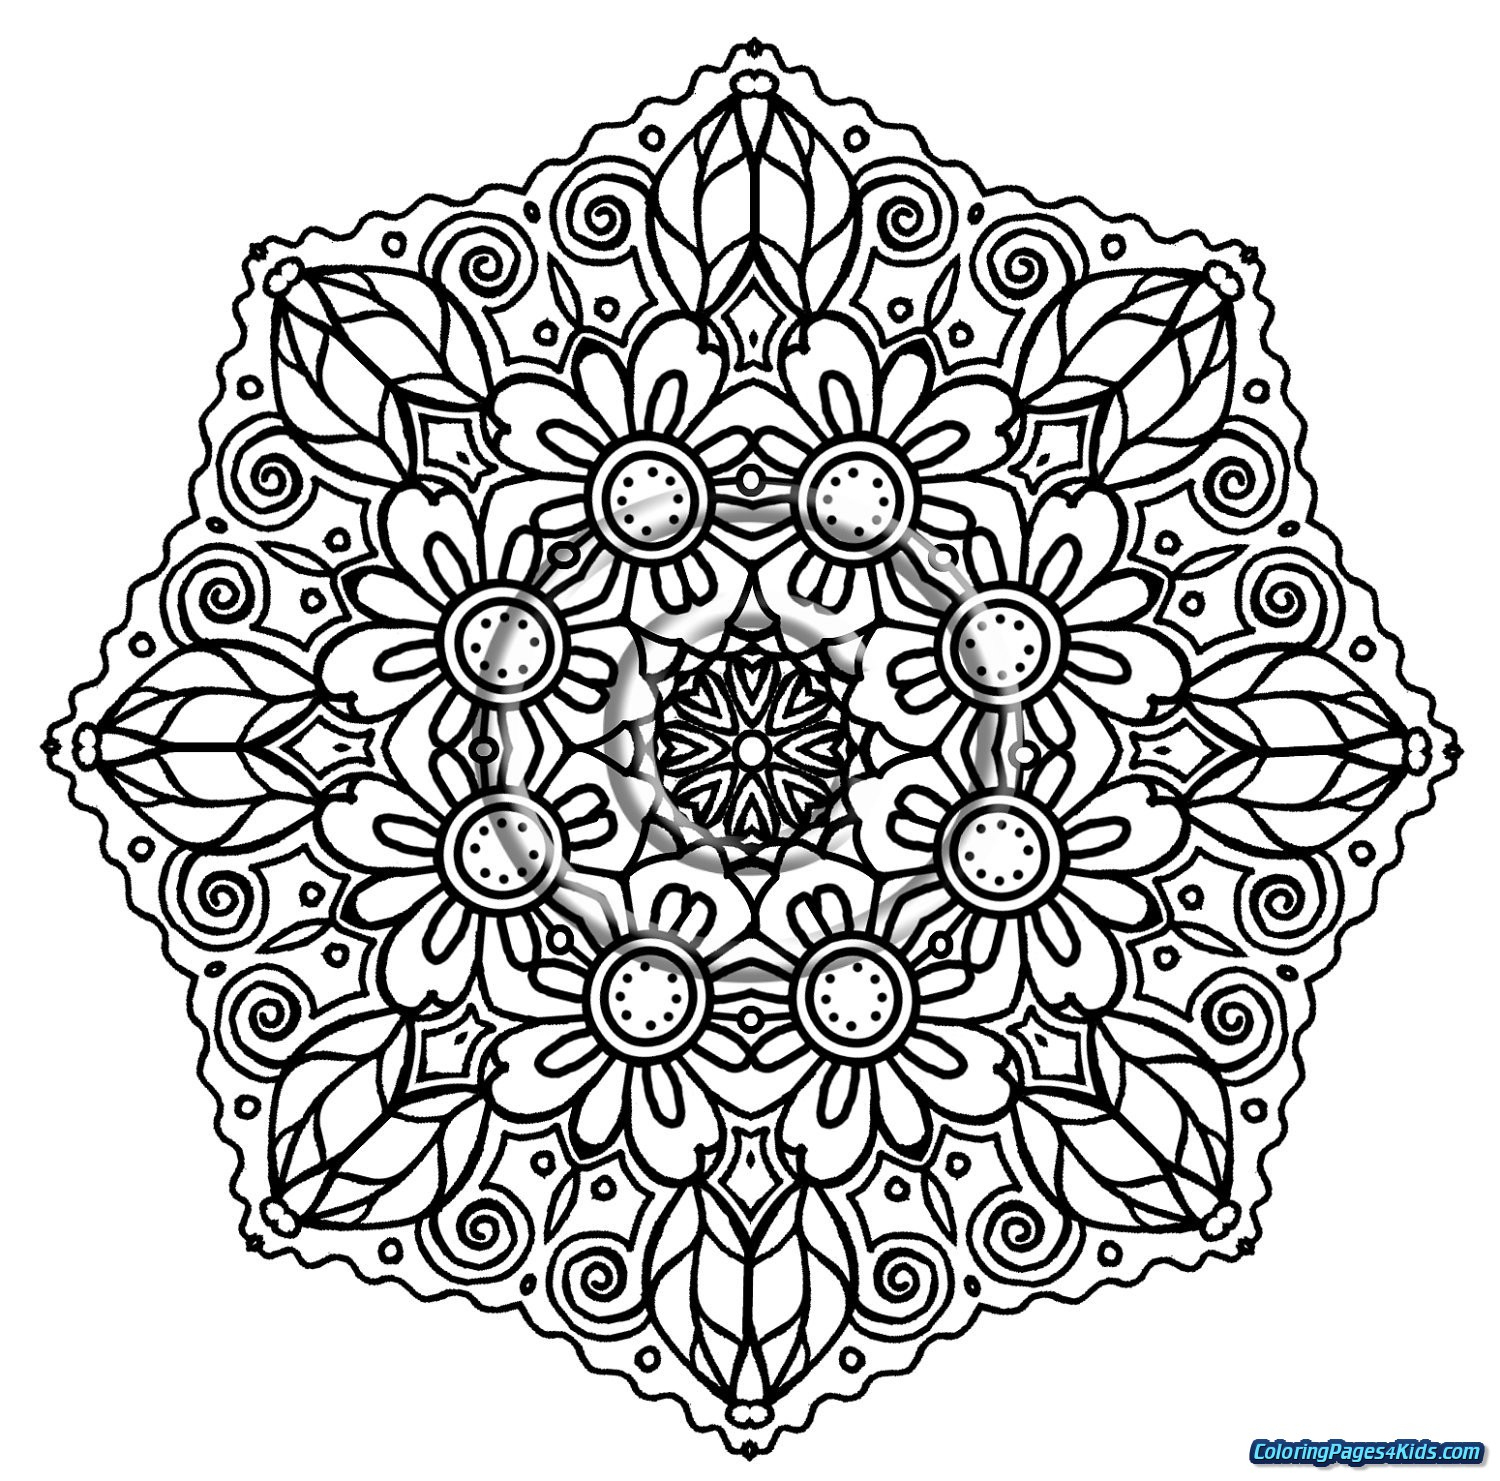 Printable Mandala Coloring Pages - Lezincnyc - Free Printable Mandala Coloring Pages